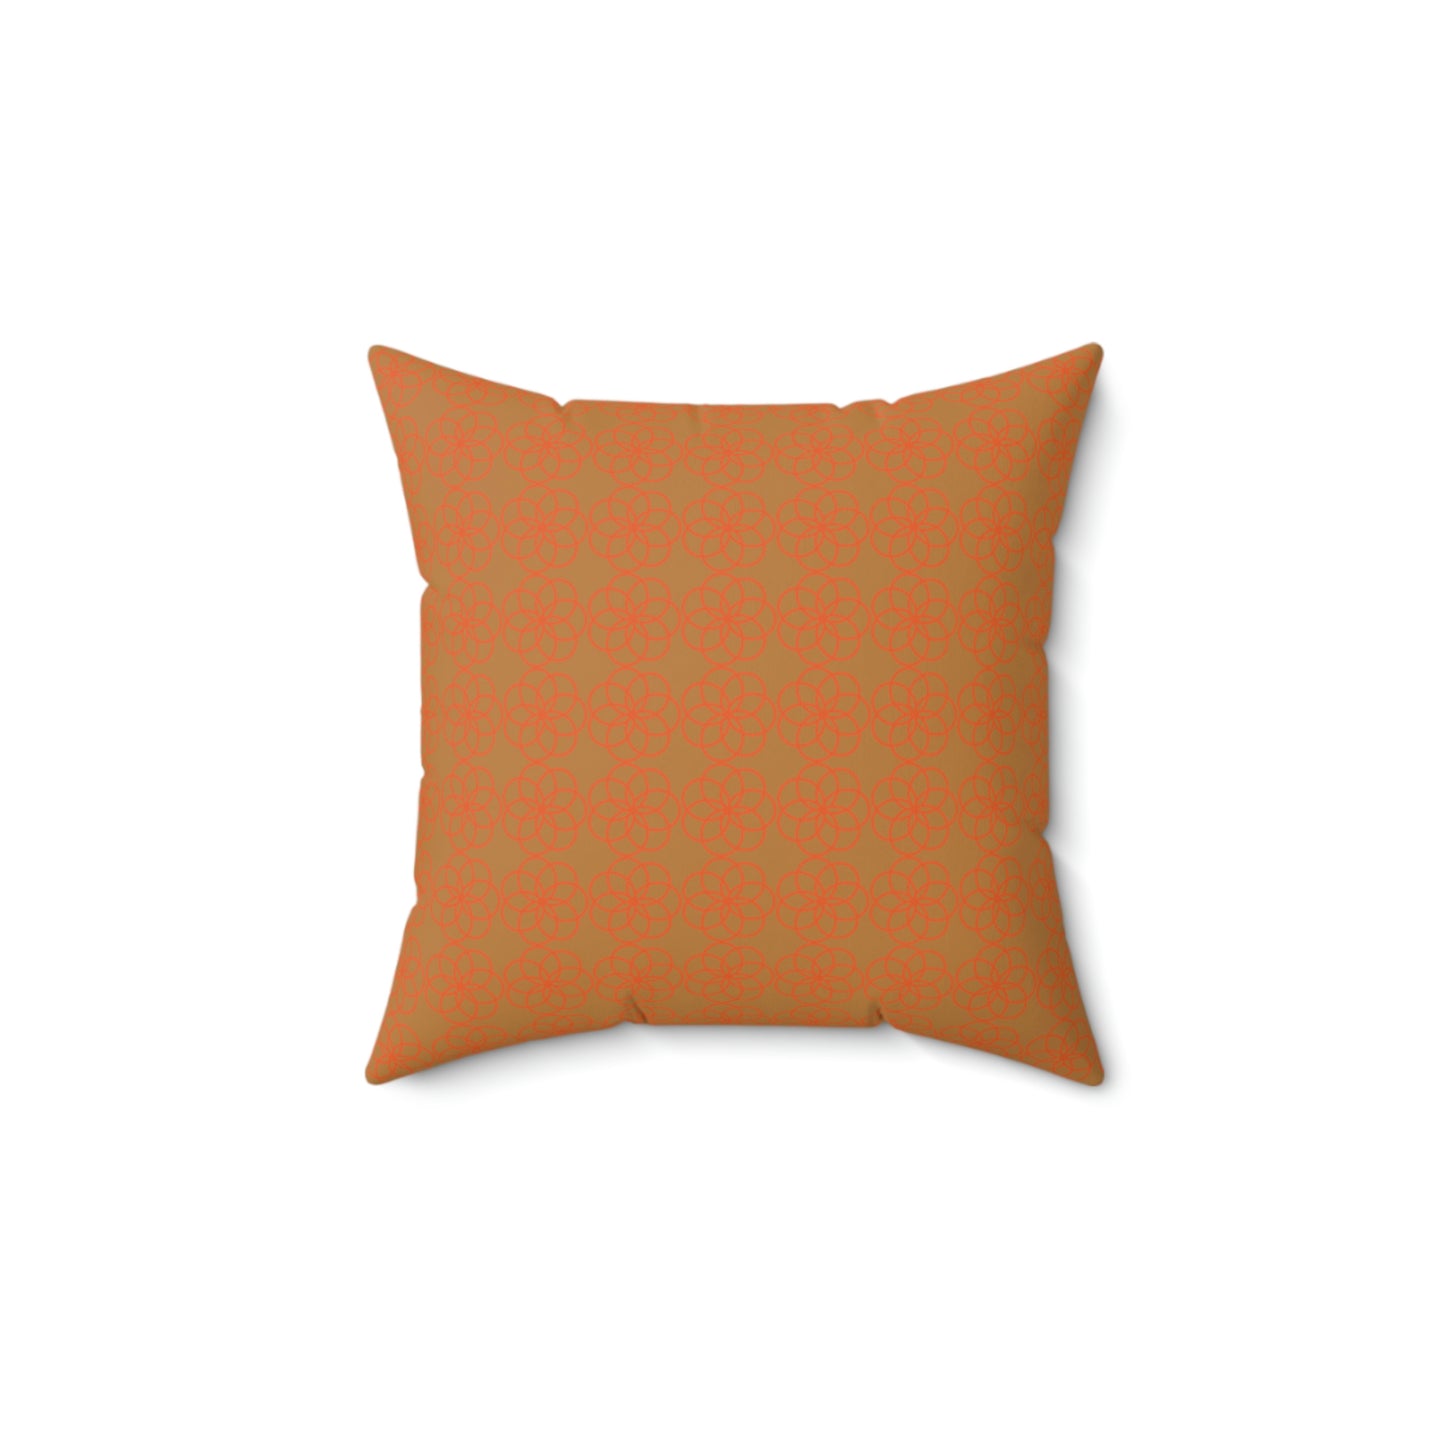 Spun Polyester Square Pillow Case “Spiral Circles on Light Brown”